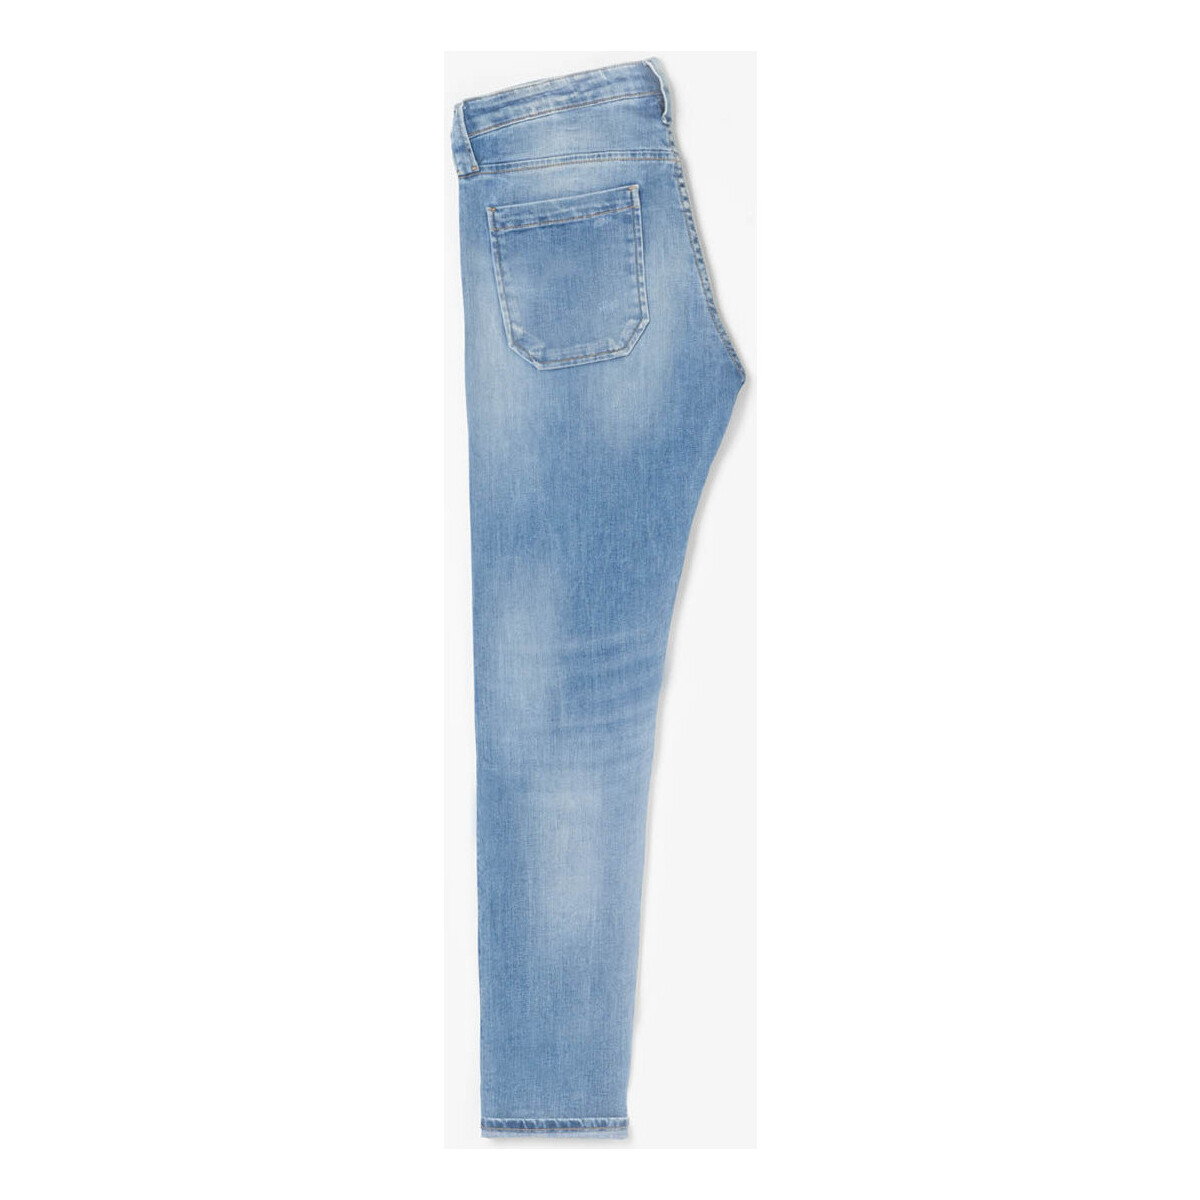 Le Temps des Cerises Bleu Cara 200/43 boyfit jeans destroy bleu TfJ5wMSU